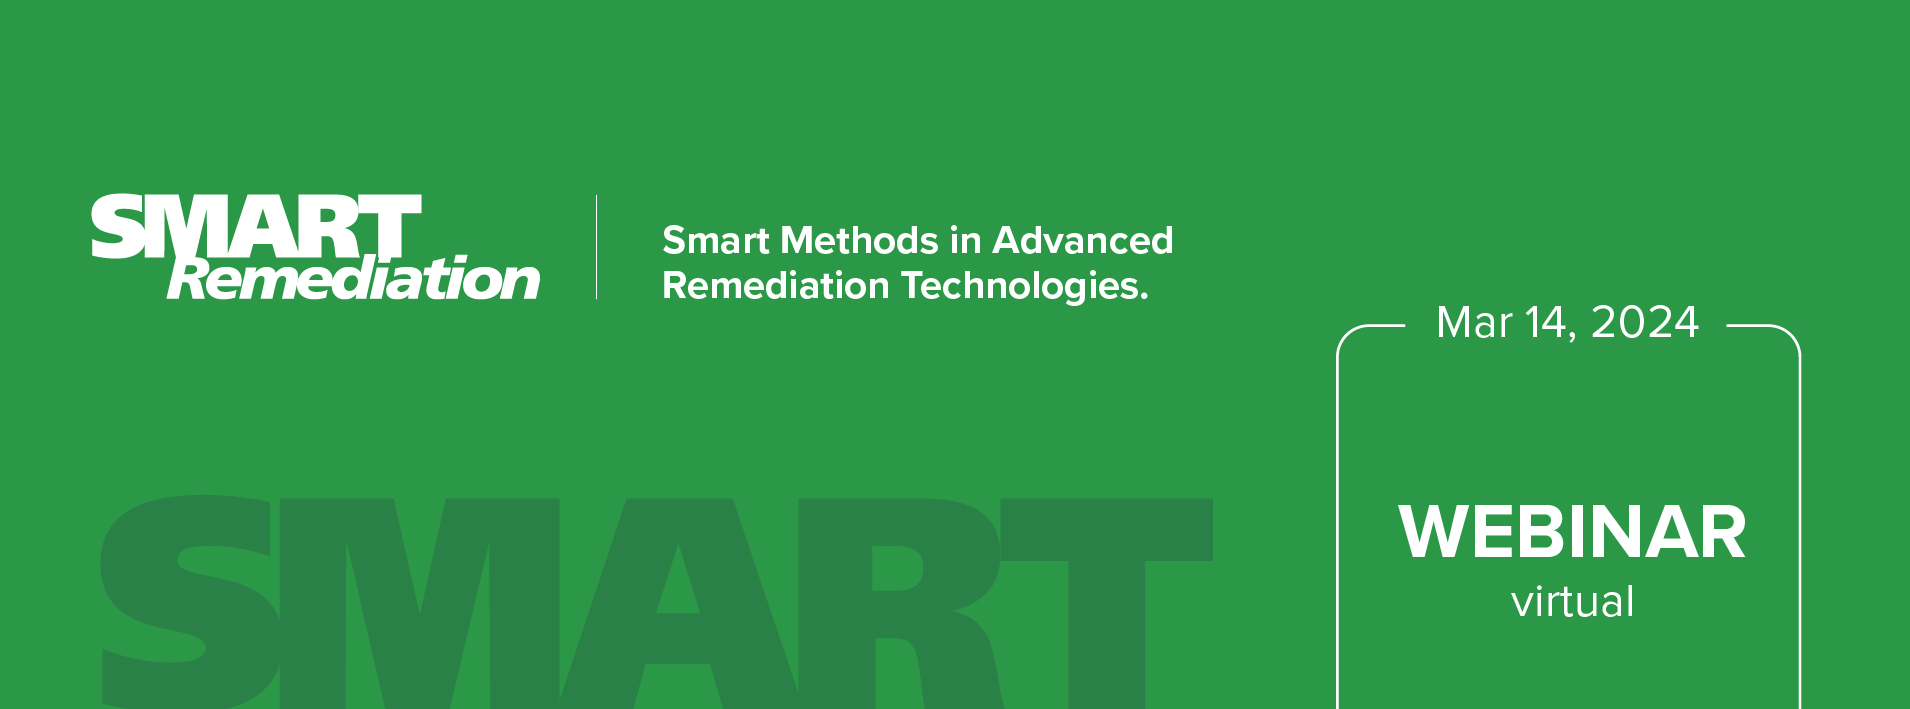 SMART Remediation Webinar_Banner